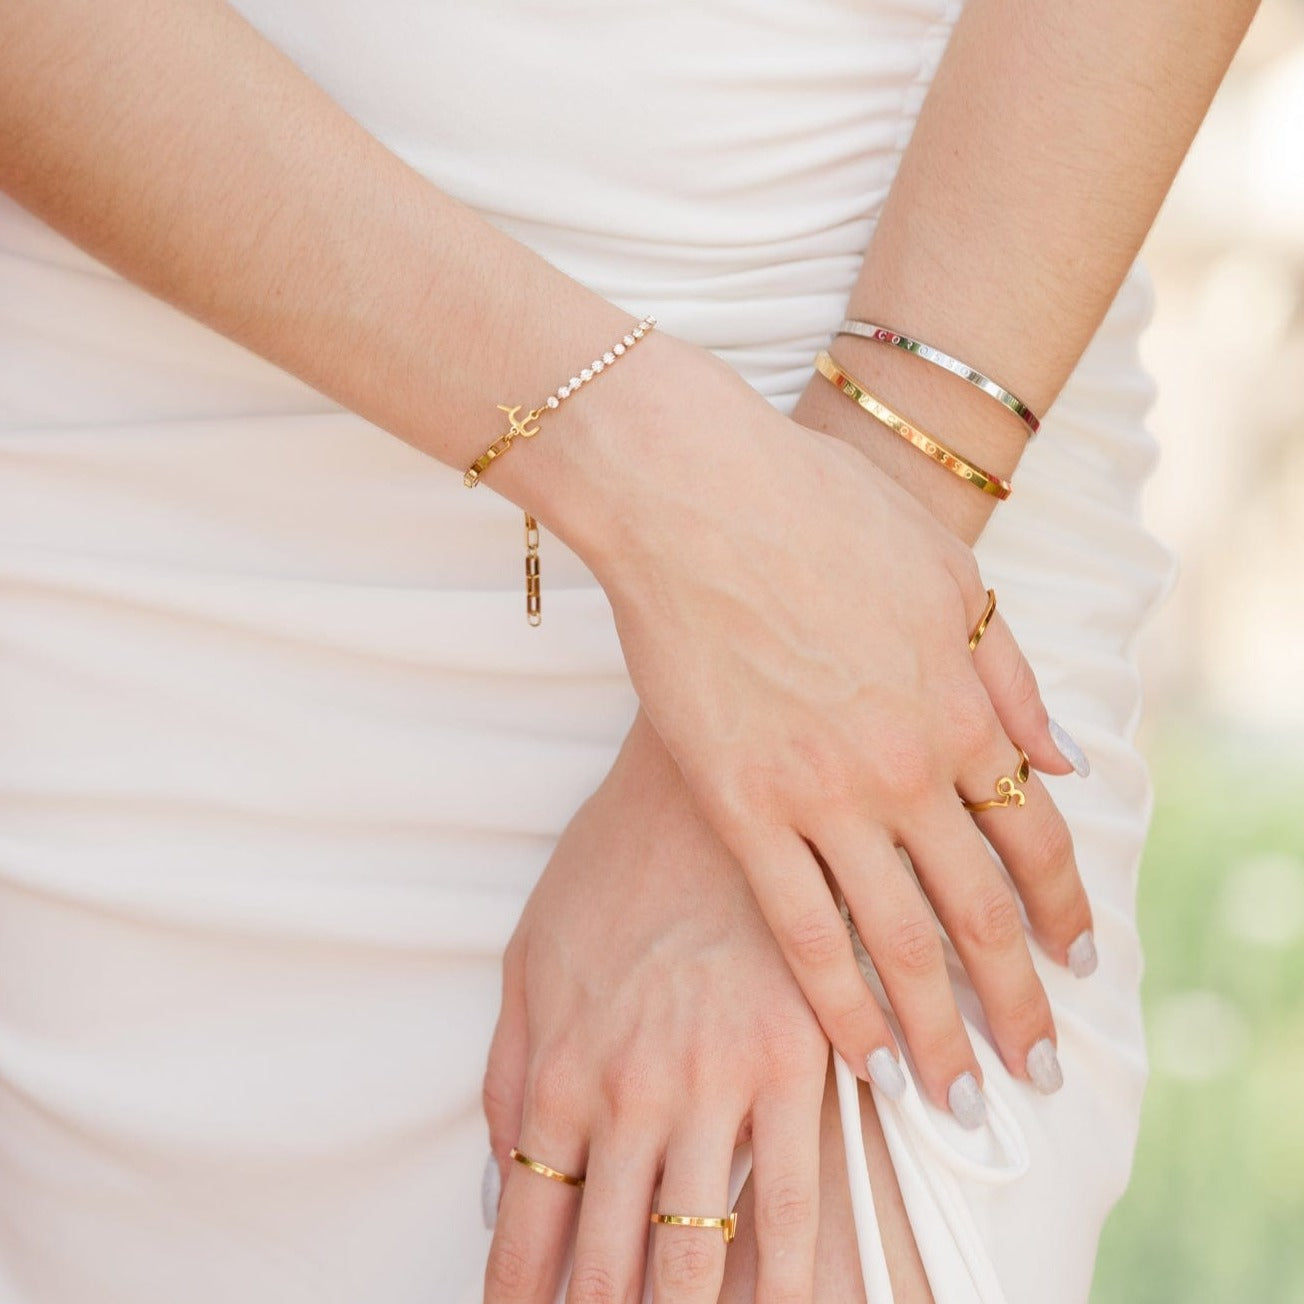 bianco rosso Bracelet Classic Rose Gold Bracelet cyprus greece jewelry gift free shipping europe worldwide